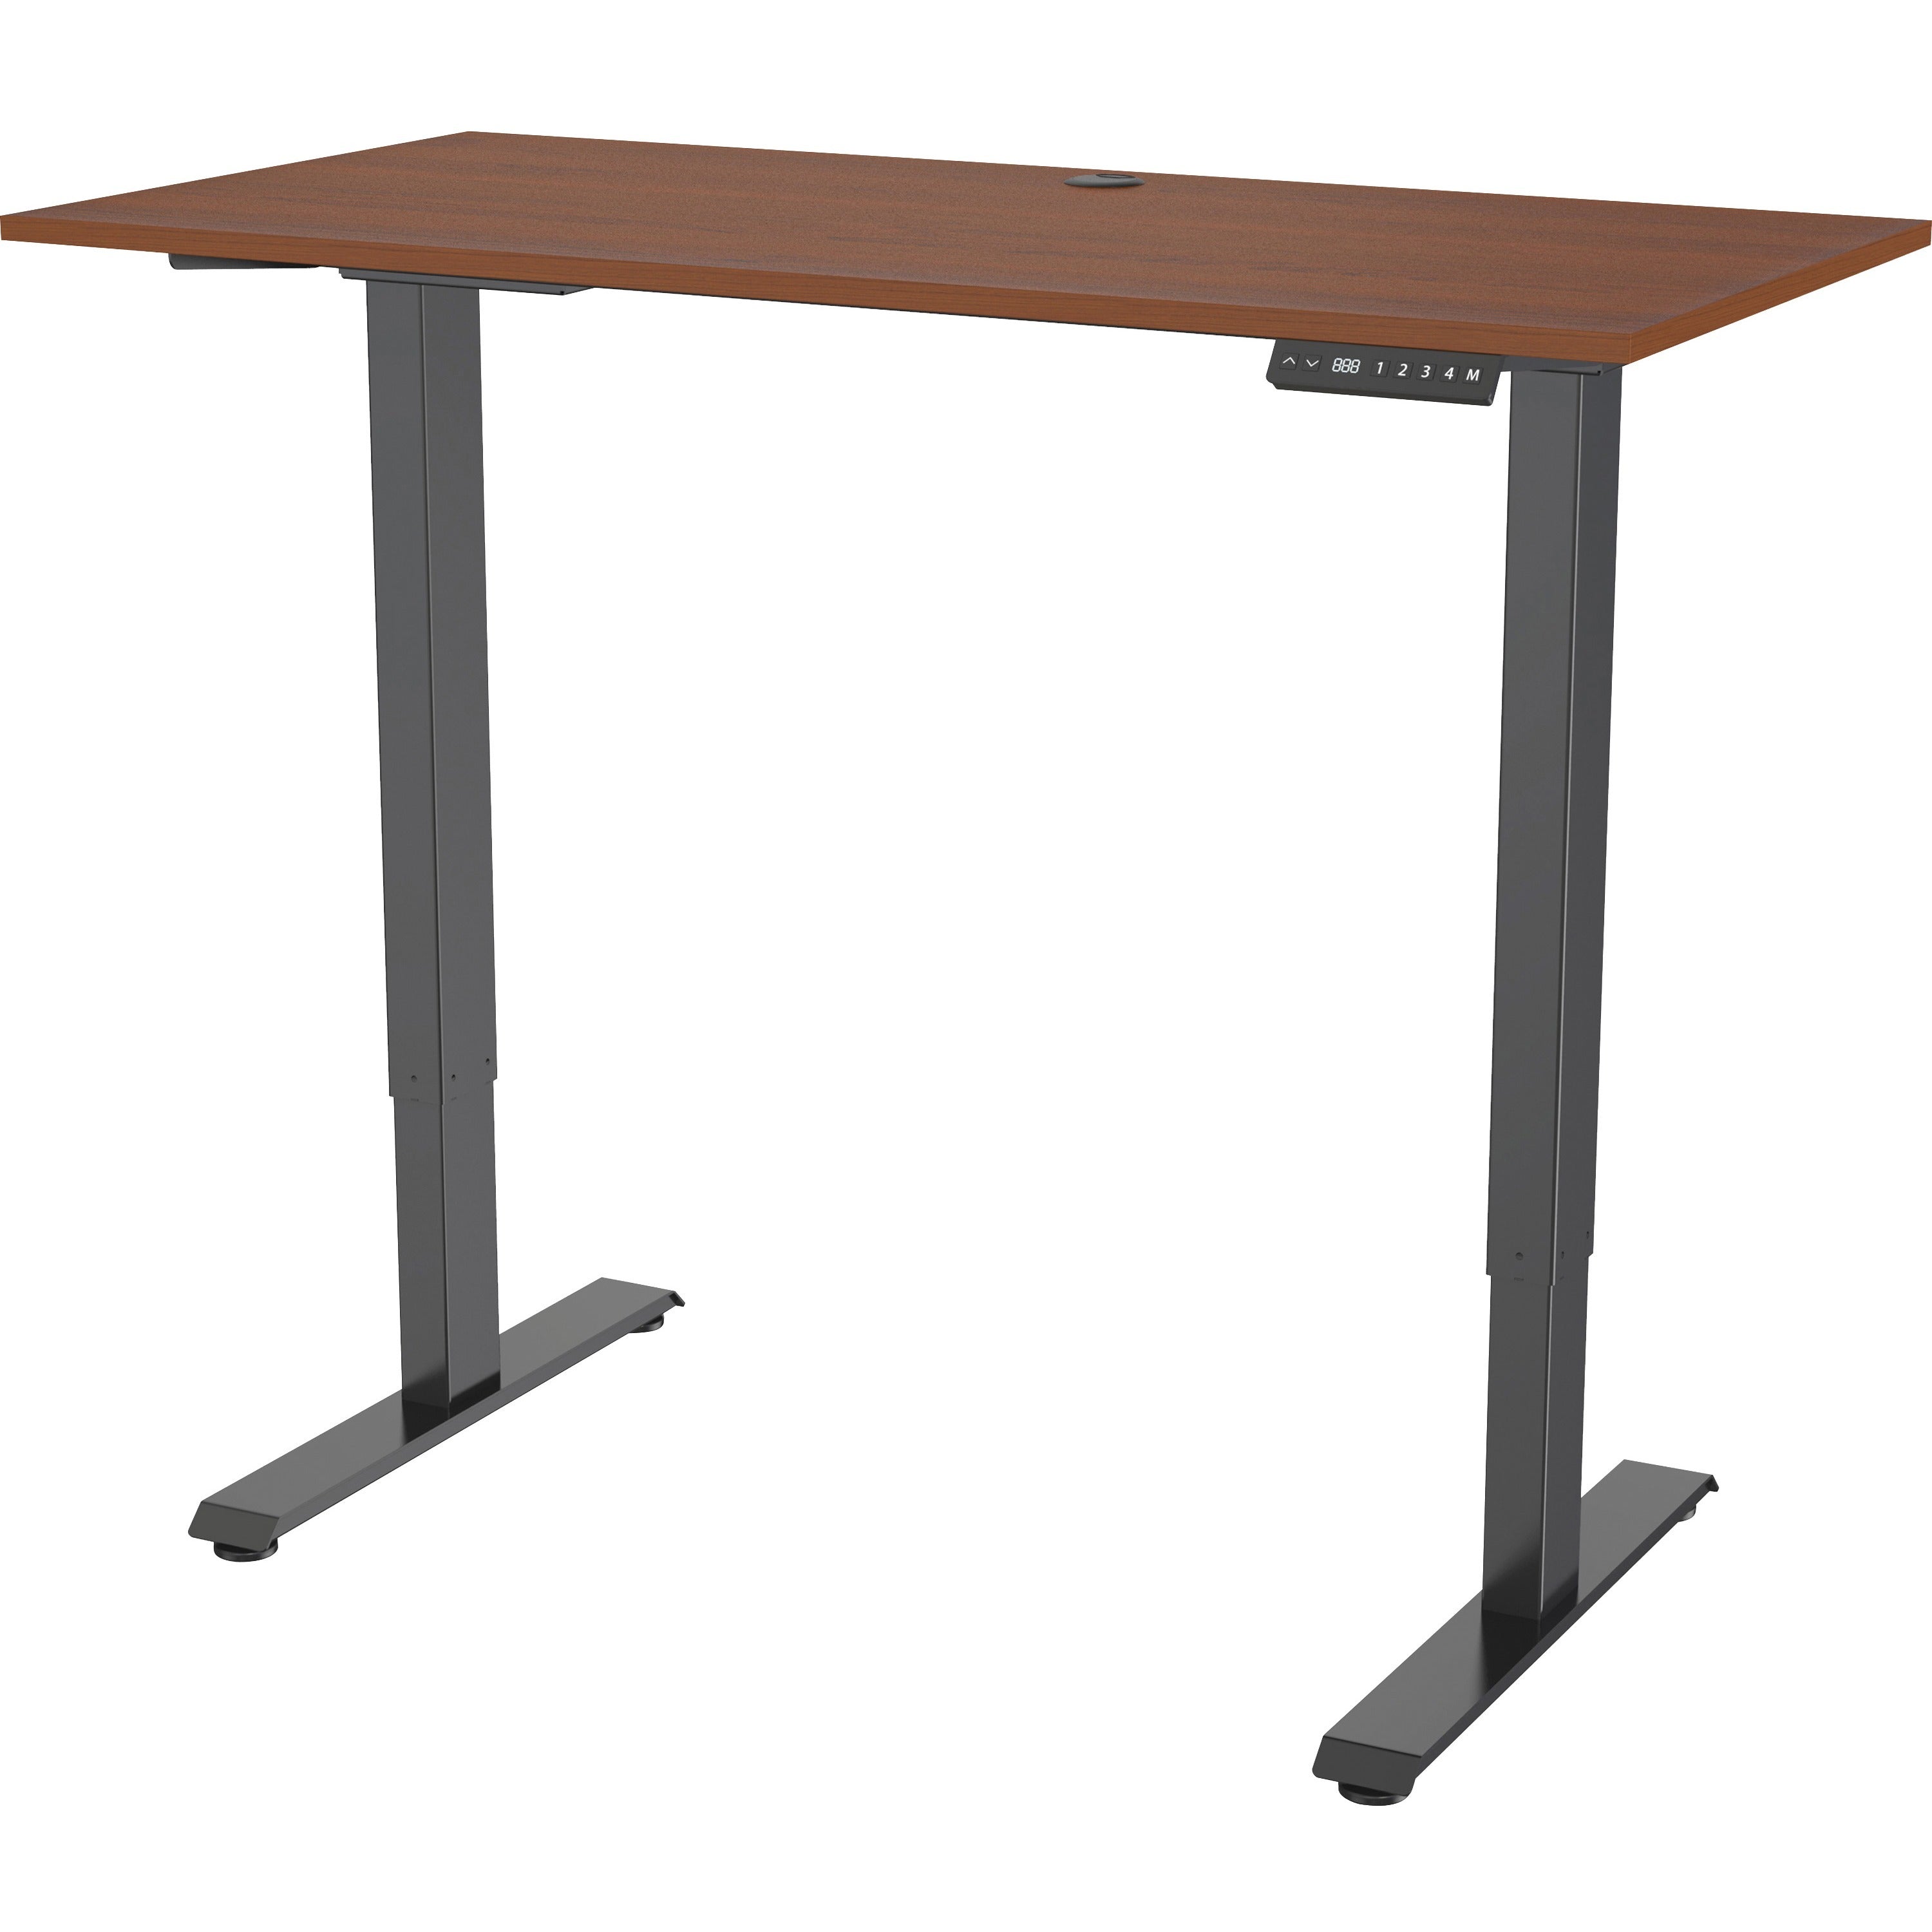 lorell-height-adjustable-2-motor-desk-for-table-topdark-walnut-rectangle-top-black-t-shaped-base-176-lb-capacity-adjustable-height-2890-to-4720-adjustment-48-table-top-length-x-24-table-top-width-x-070-table-top-thickness-472_llr03620 - 3